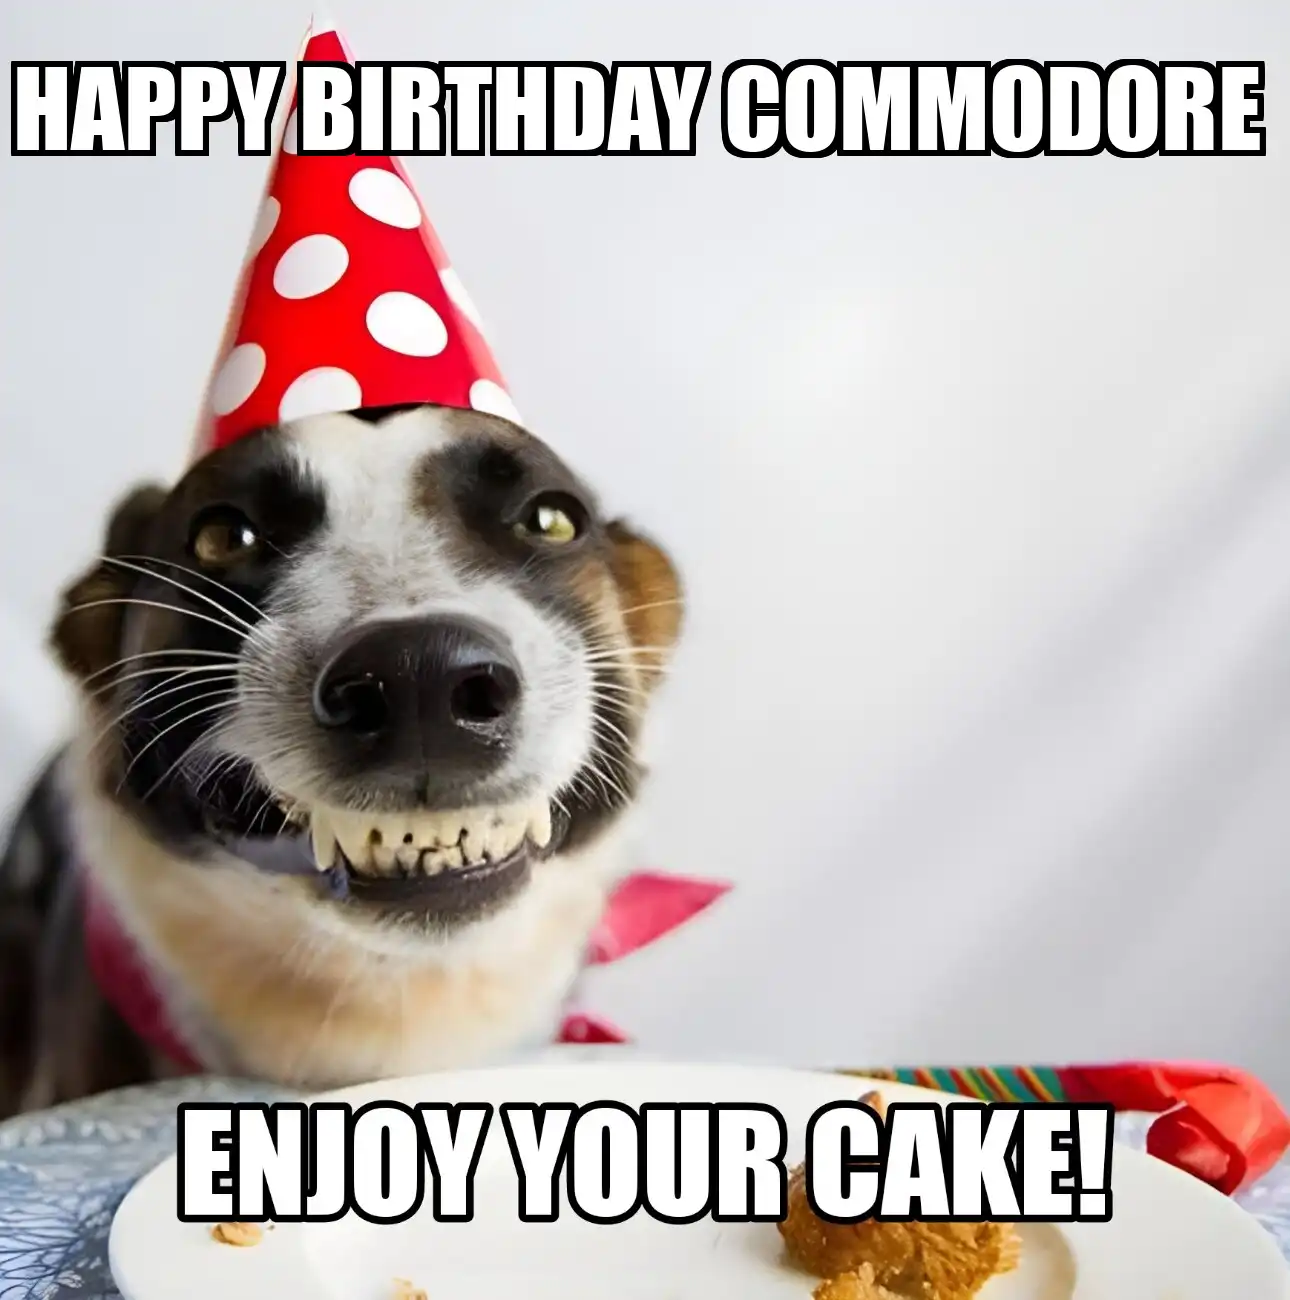 Happy Birthday Commodore Enjoy Your Cake Dog Meme